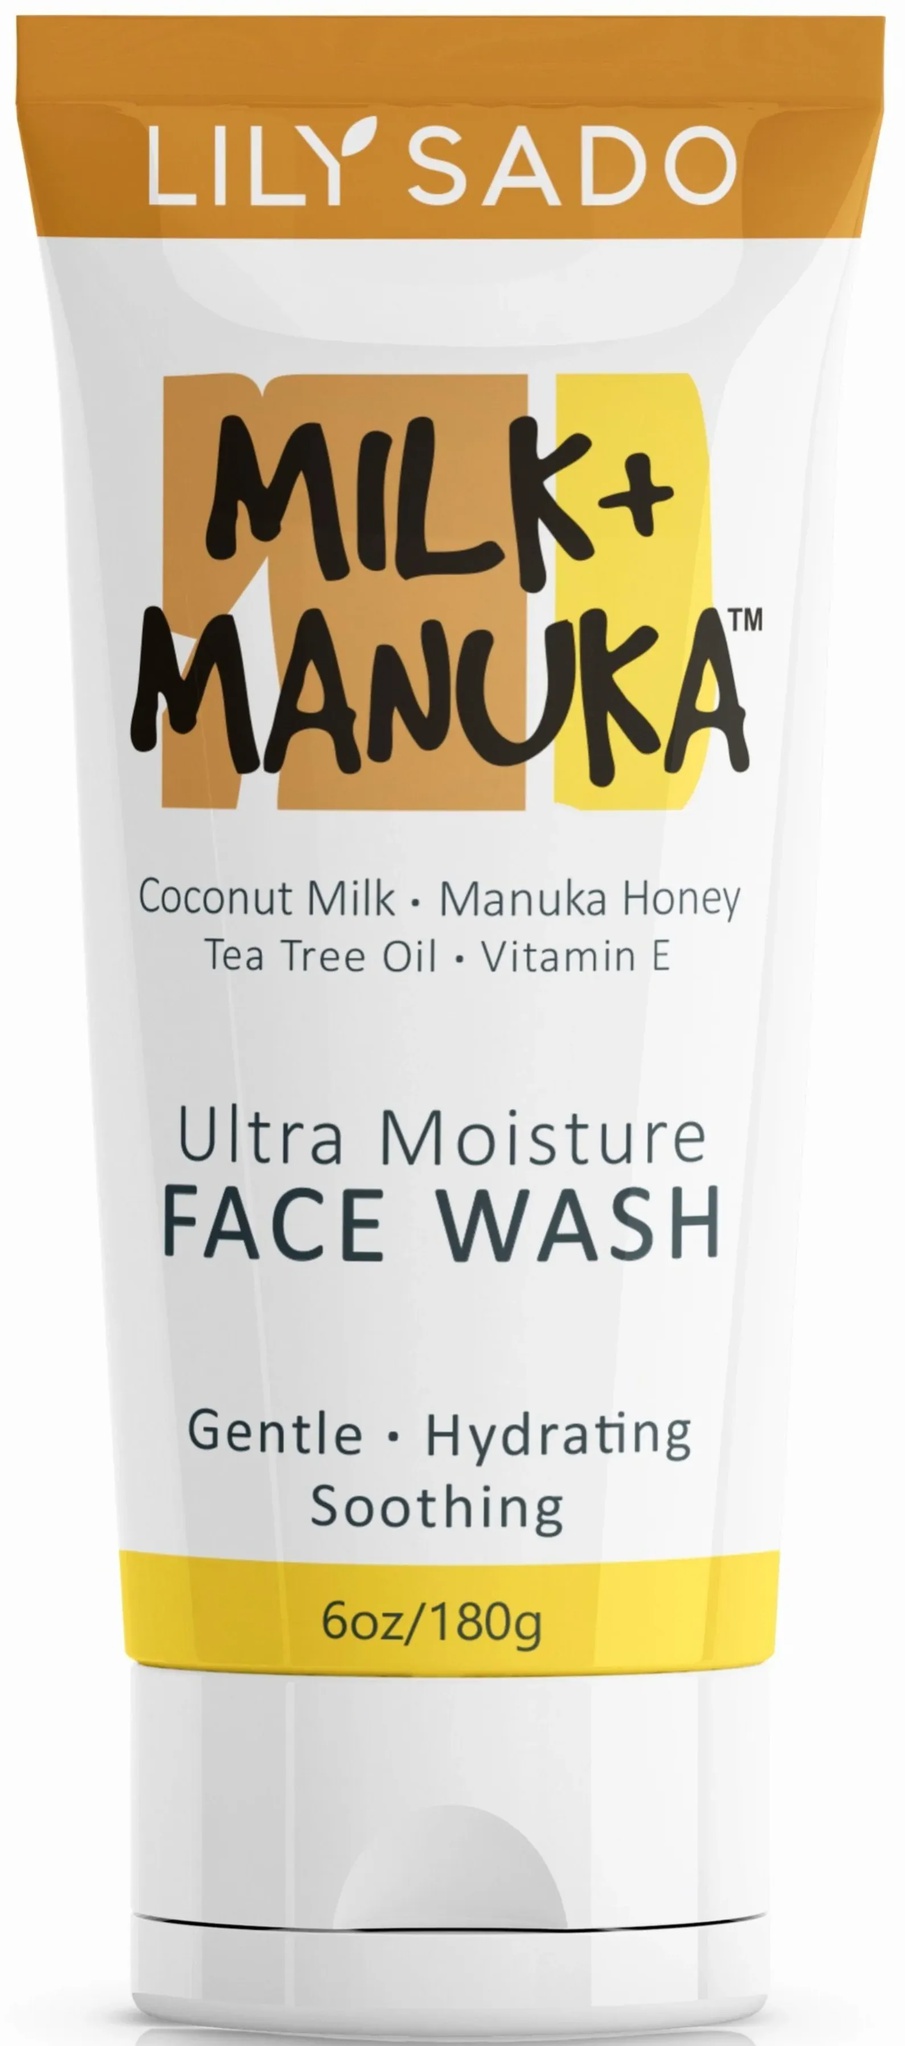 LILY SADO Milk+ Manuka Ultra Moisture Face Wash